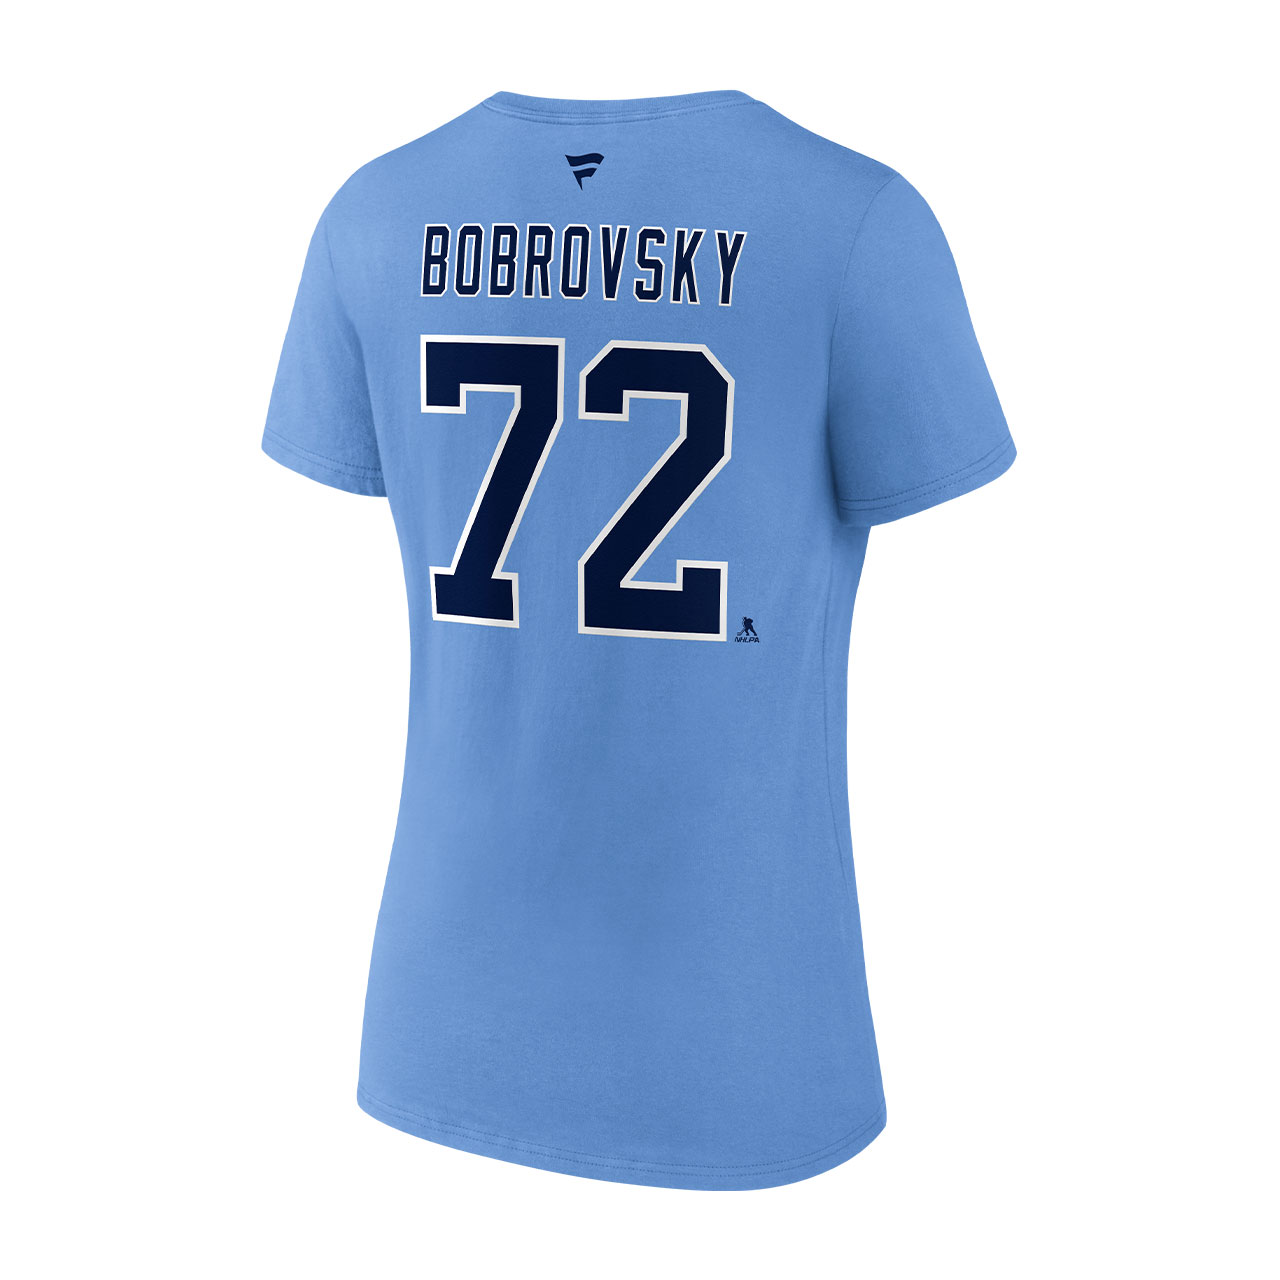 Sergei Bobrovsky Florida Panthers IMPACT Jersey Frame